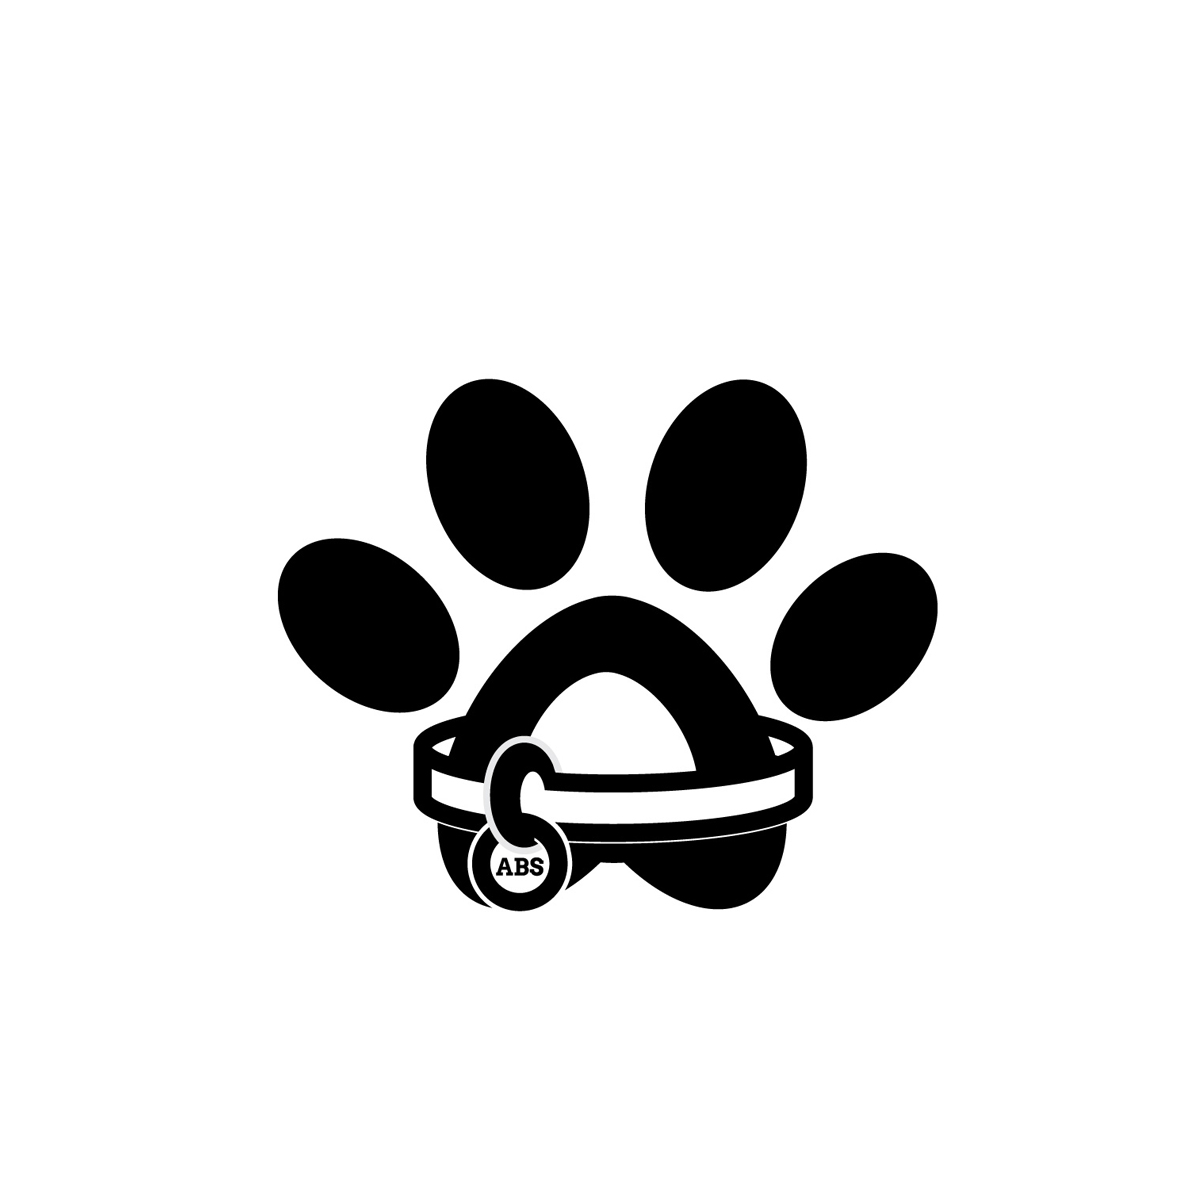 dog training ABS typographic monogram logo